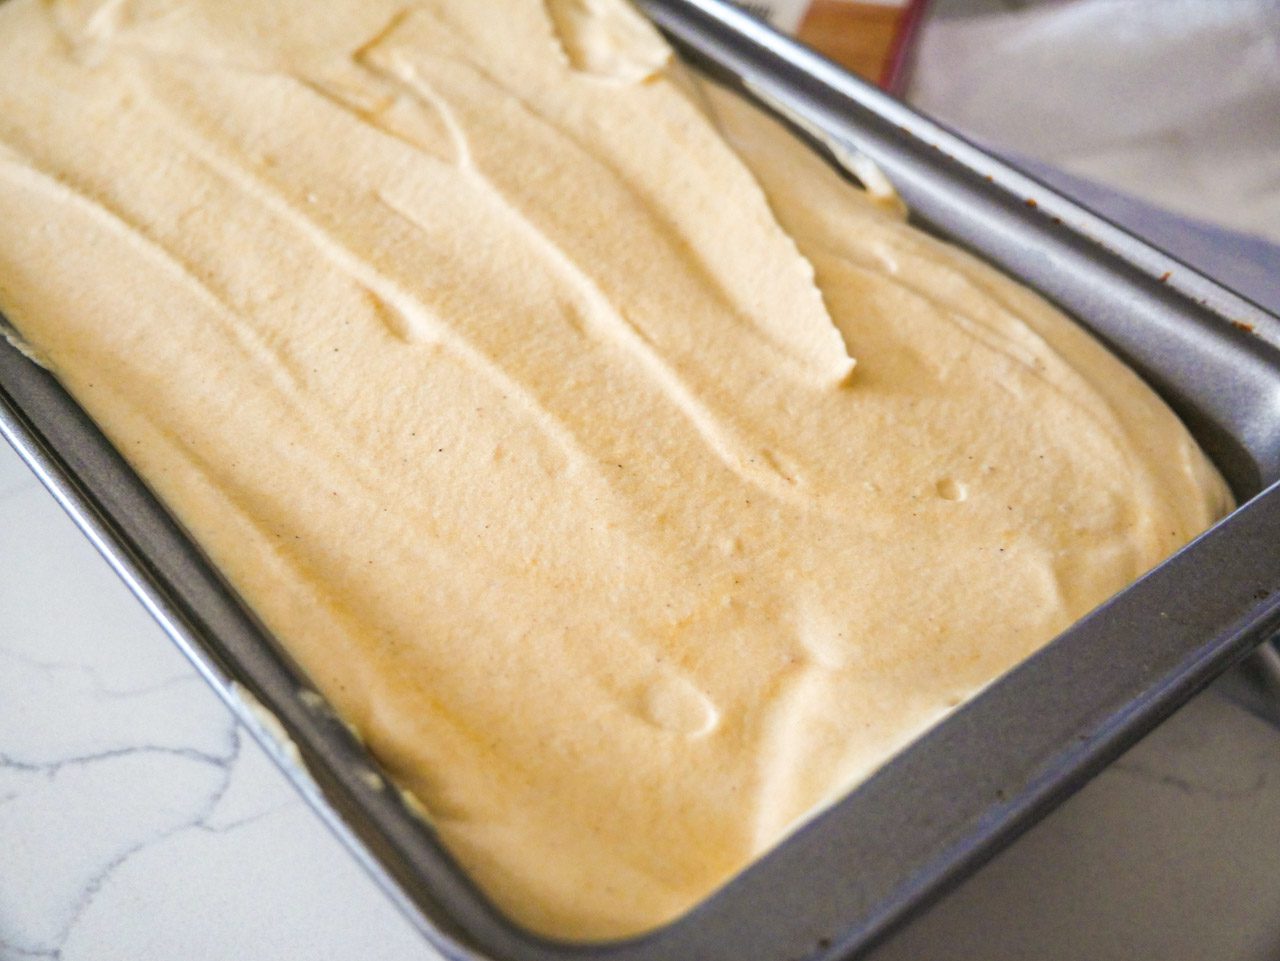 Sweet potato condensed milk mixture spread into loaf pan.